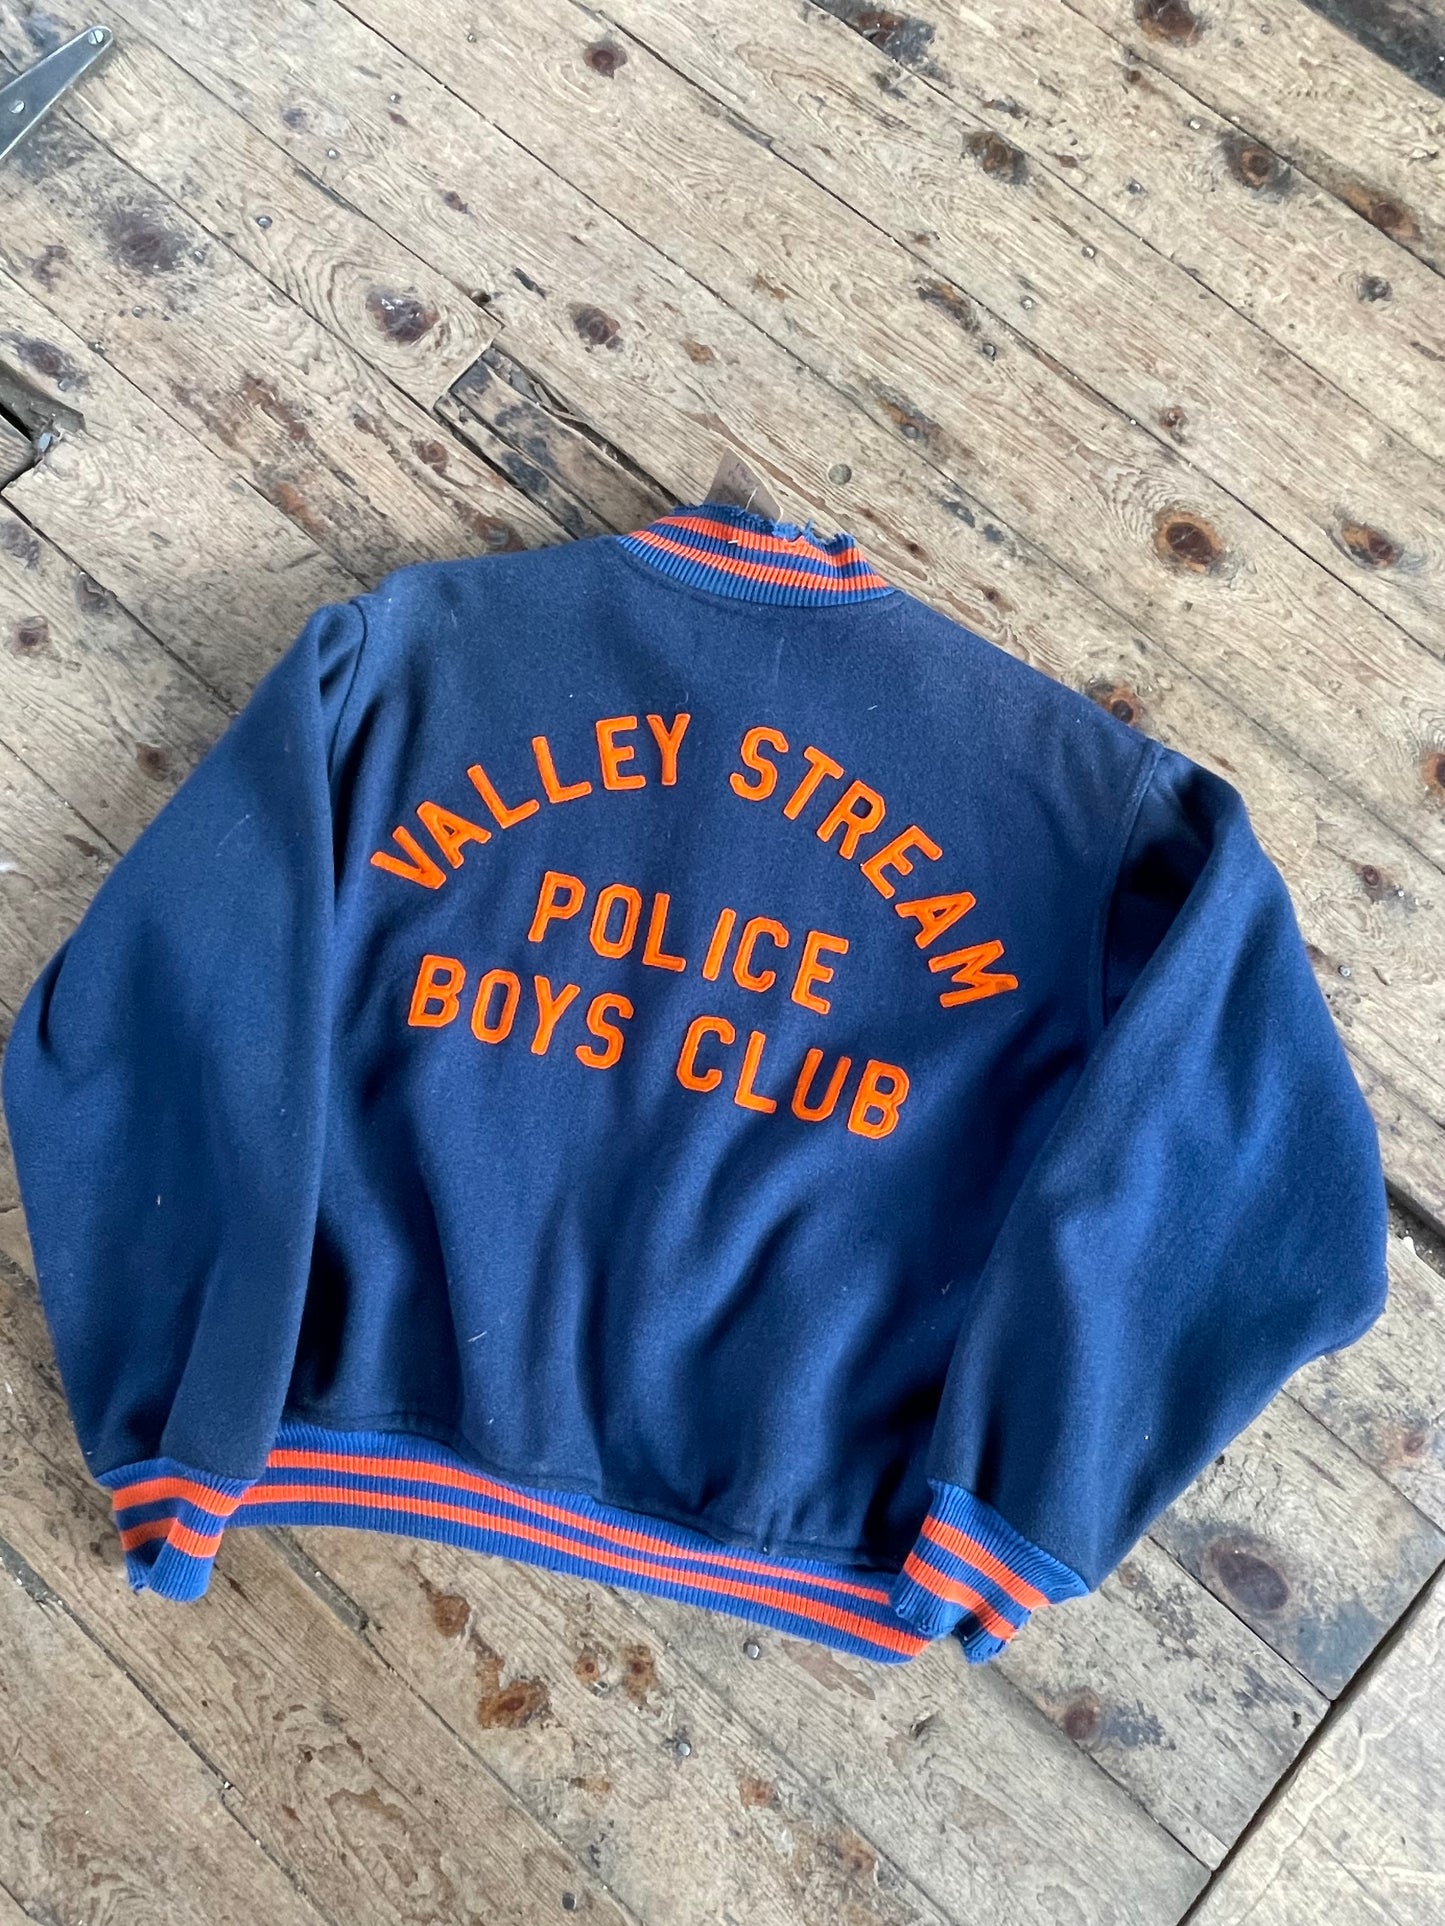 1960s Felco Valley Stream Police Boys Club Varsity jacket (46)